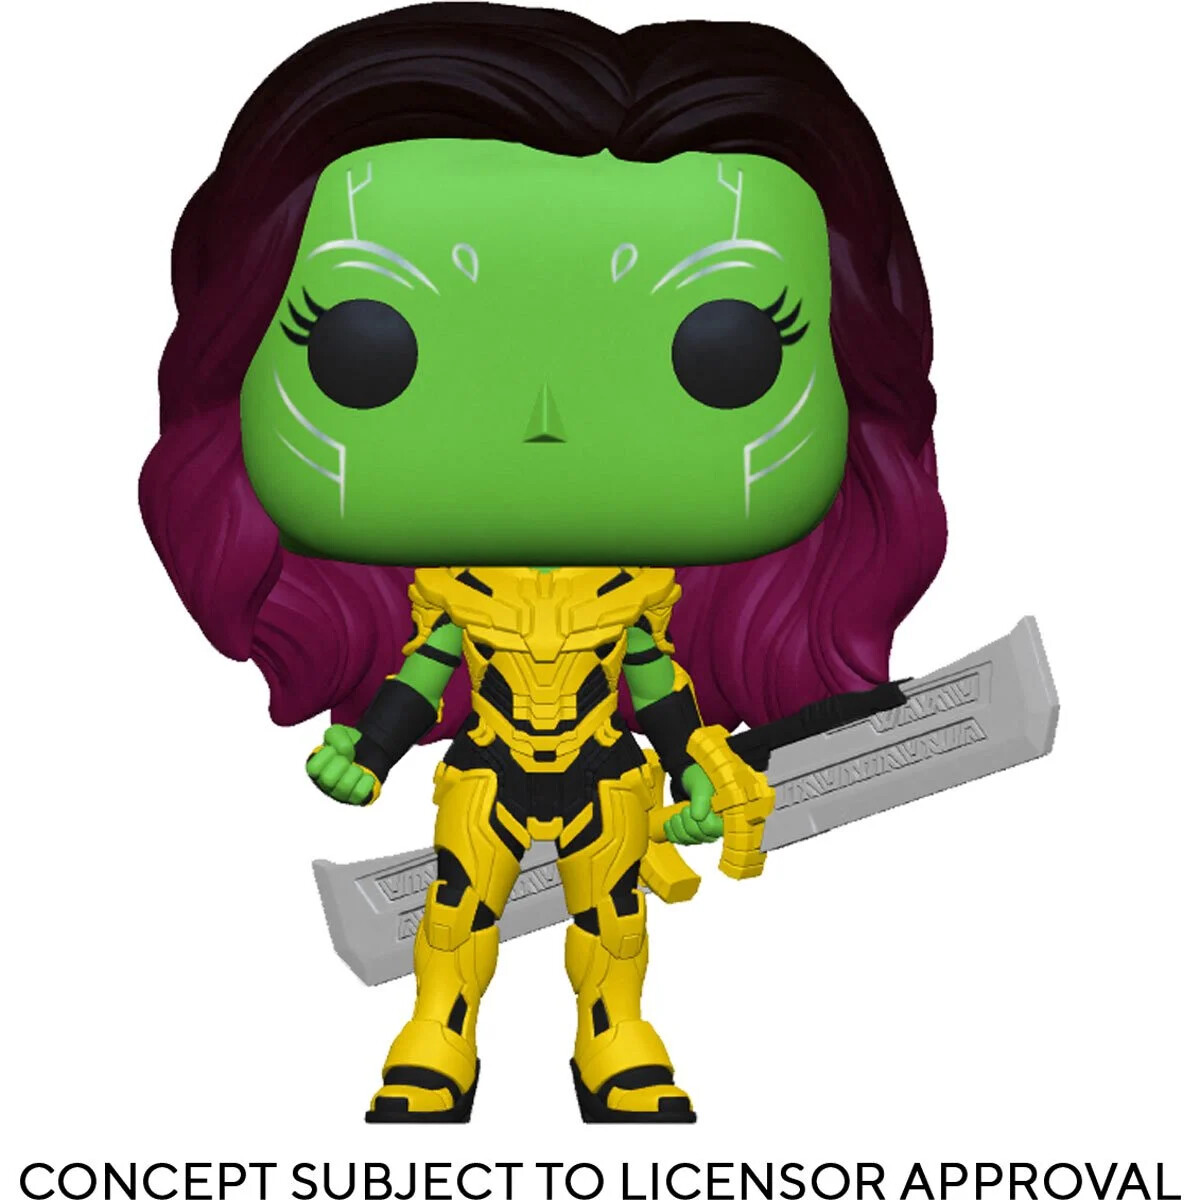 PRE-ORDER Funko Marvel's What If Gamora with Blade of Thanos Pop! Vinyl Figure